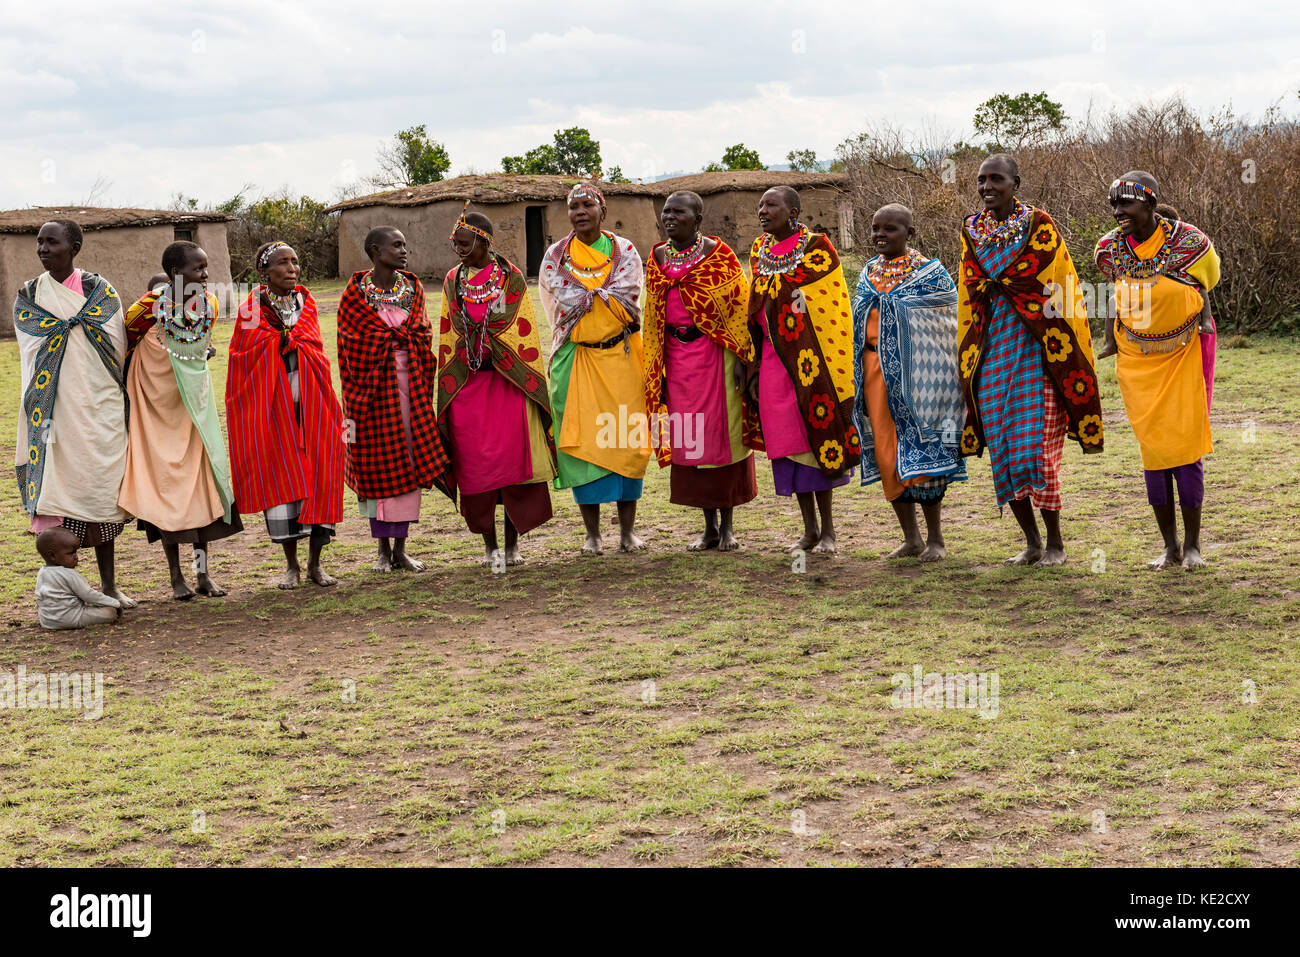 Maasai Village people in the Masai Mara, Kenya Stock Photo - Alamy